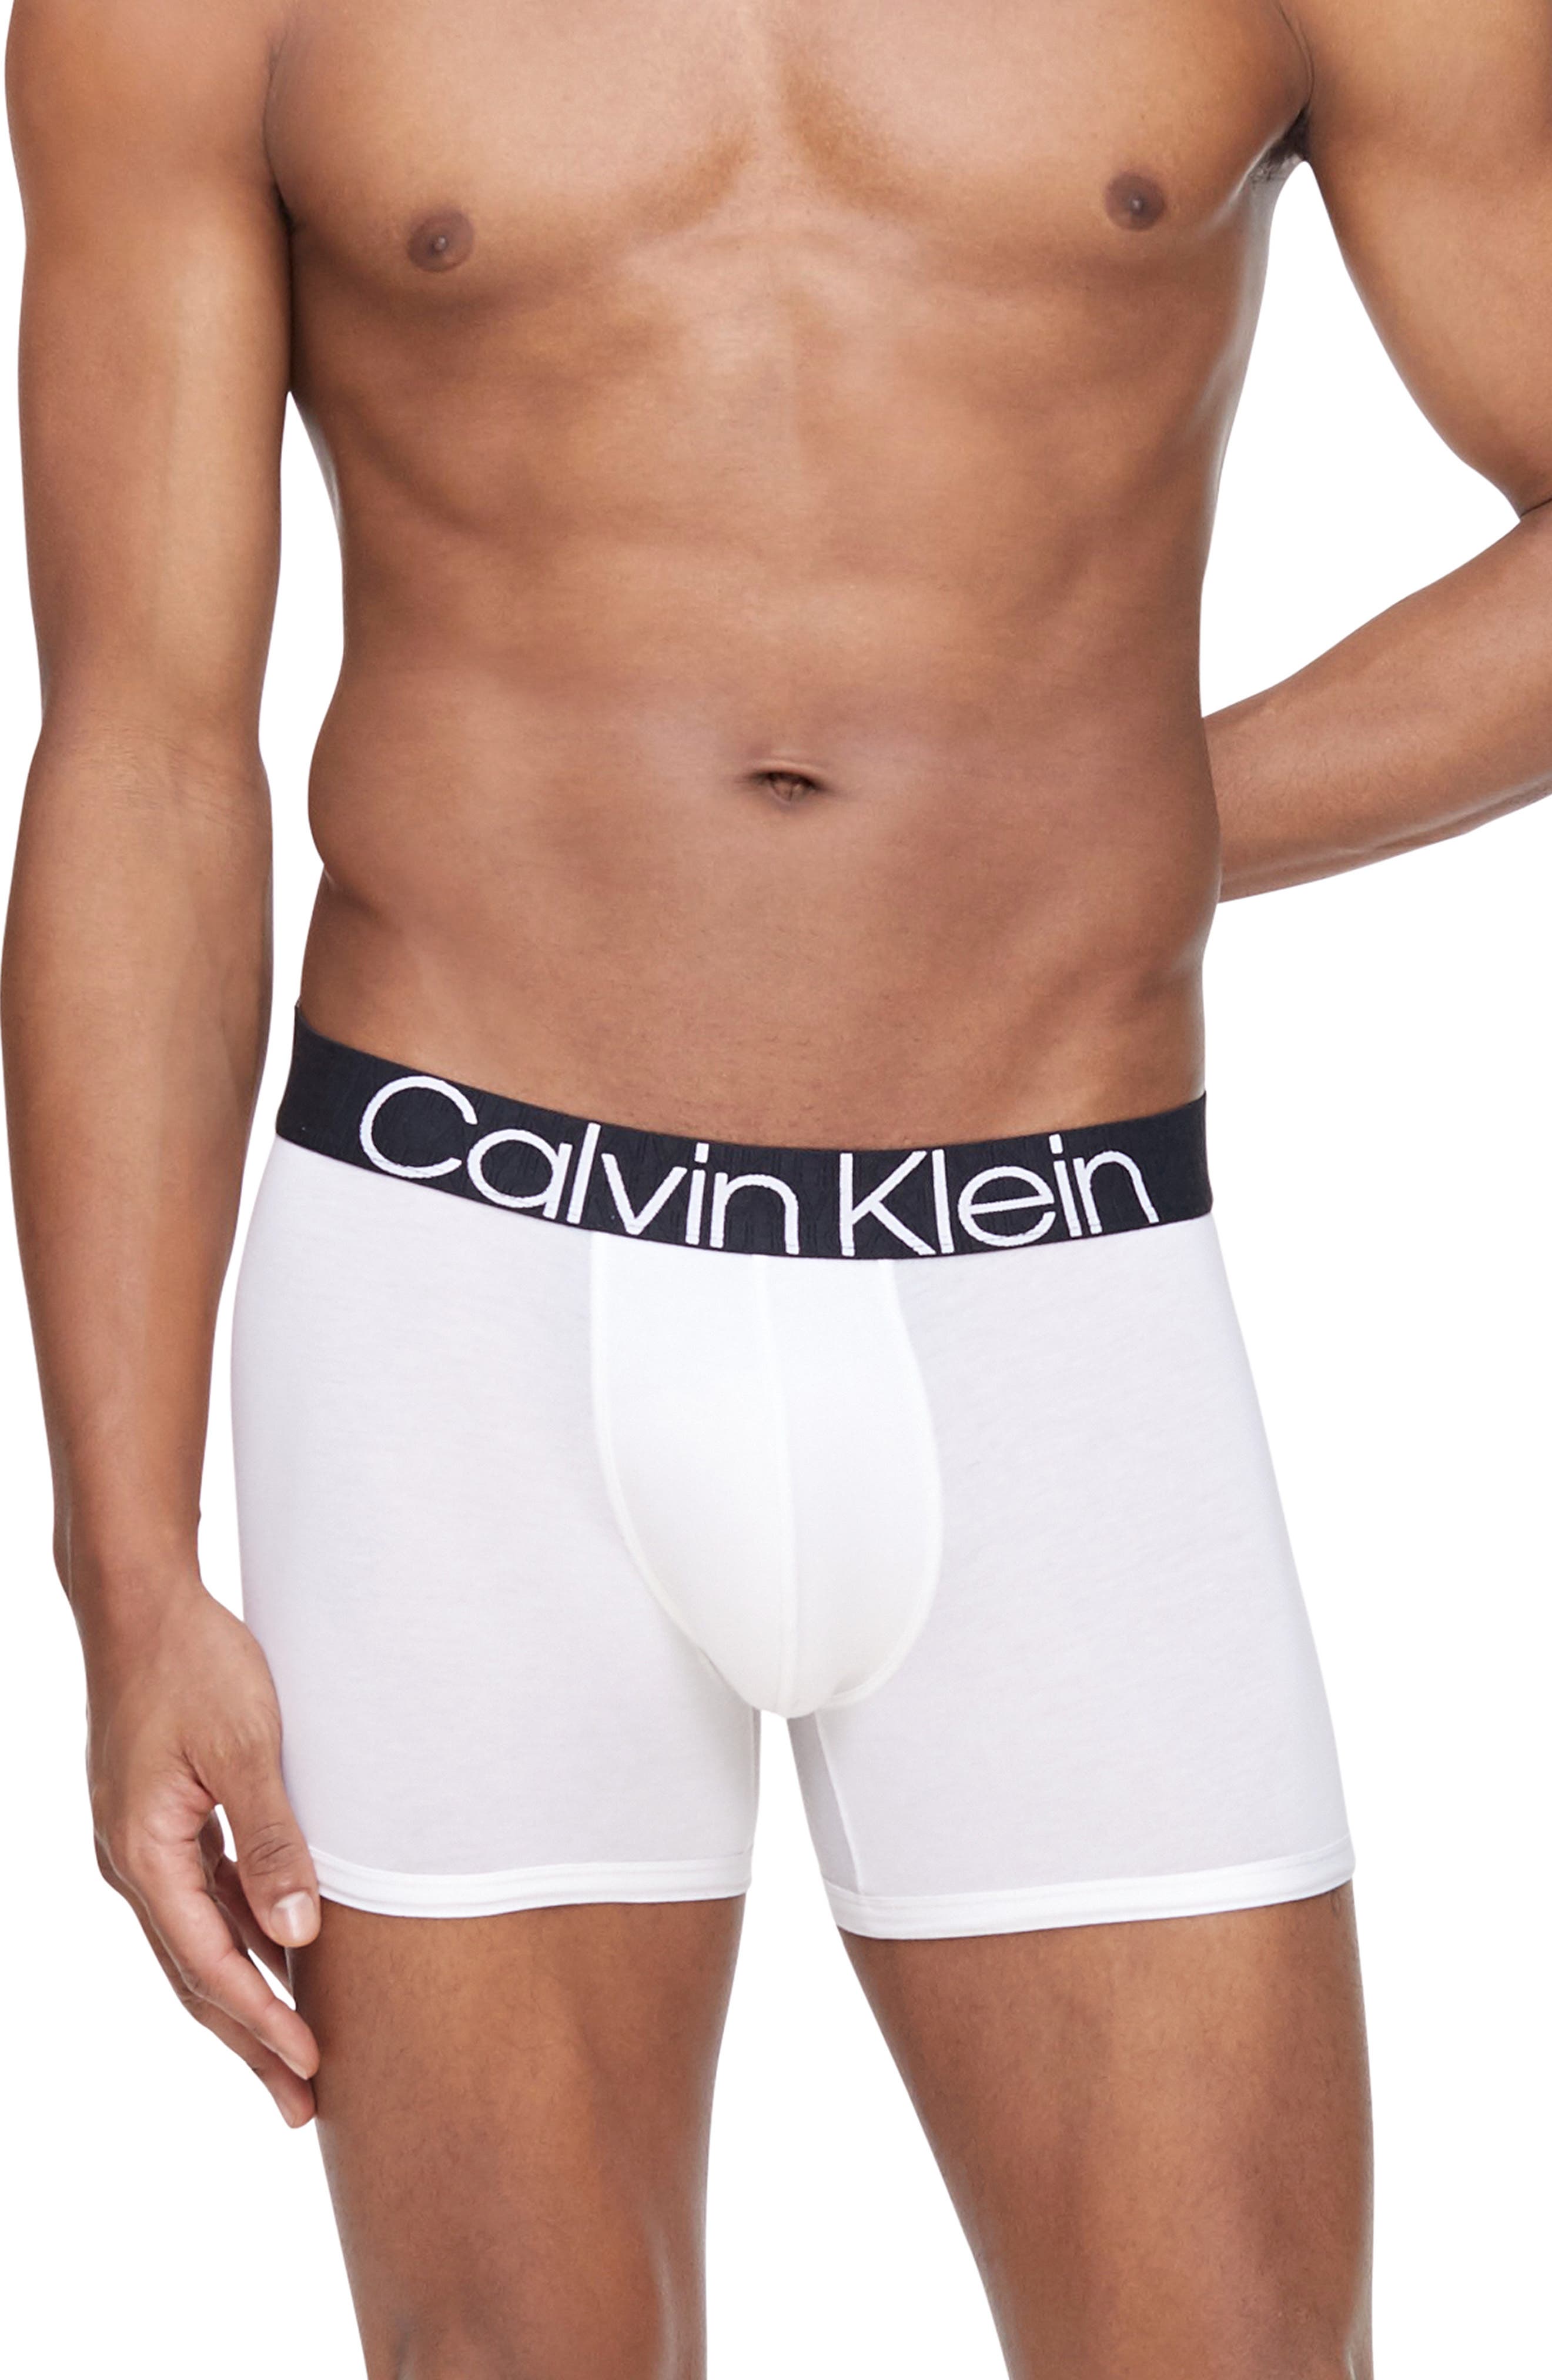 UPC 790812539422 product image for Men's Calvin Klein Eco Cotton Blend Boxer Briefs, Size Large - White | upcitemdb.com